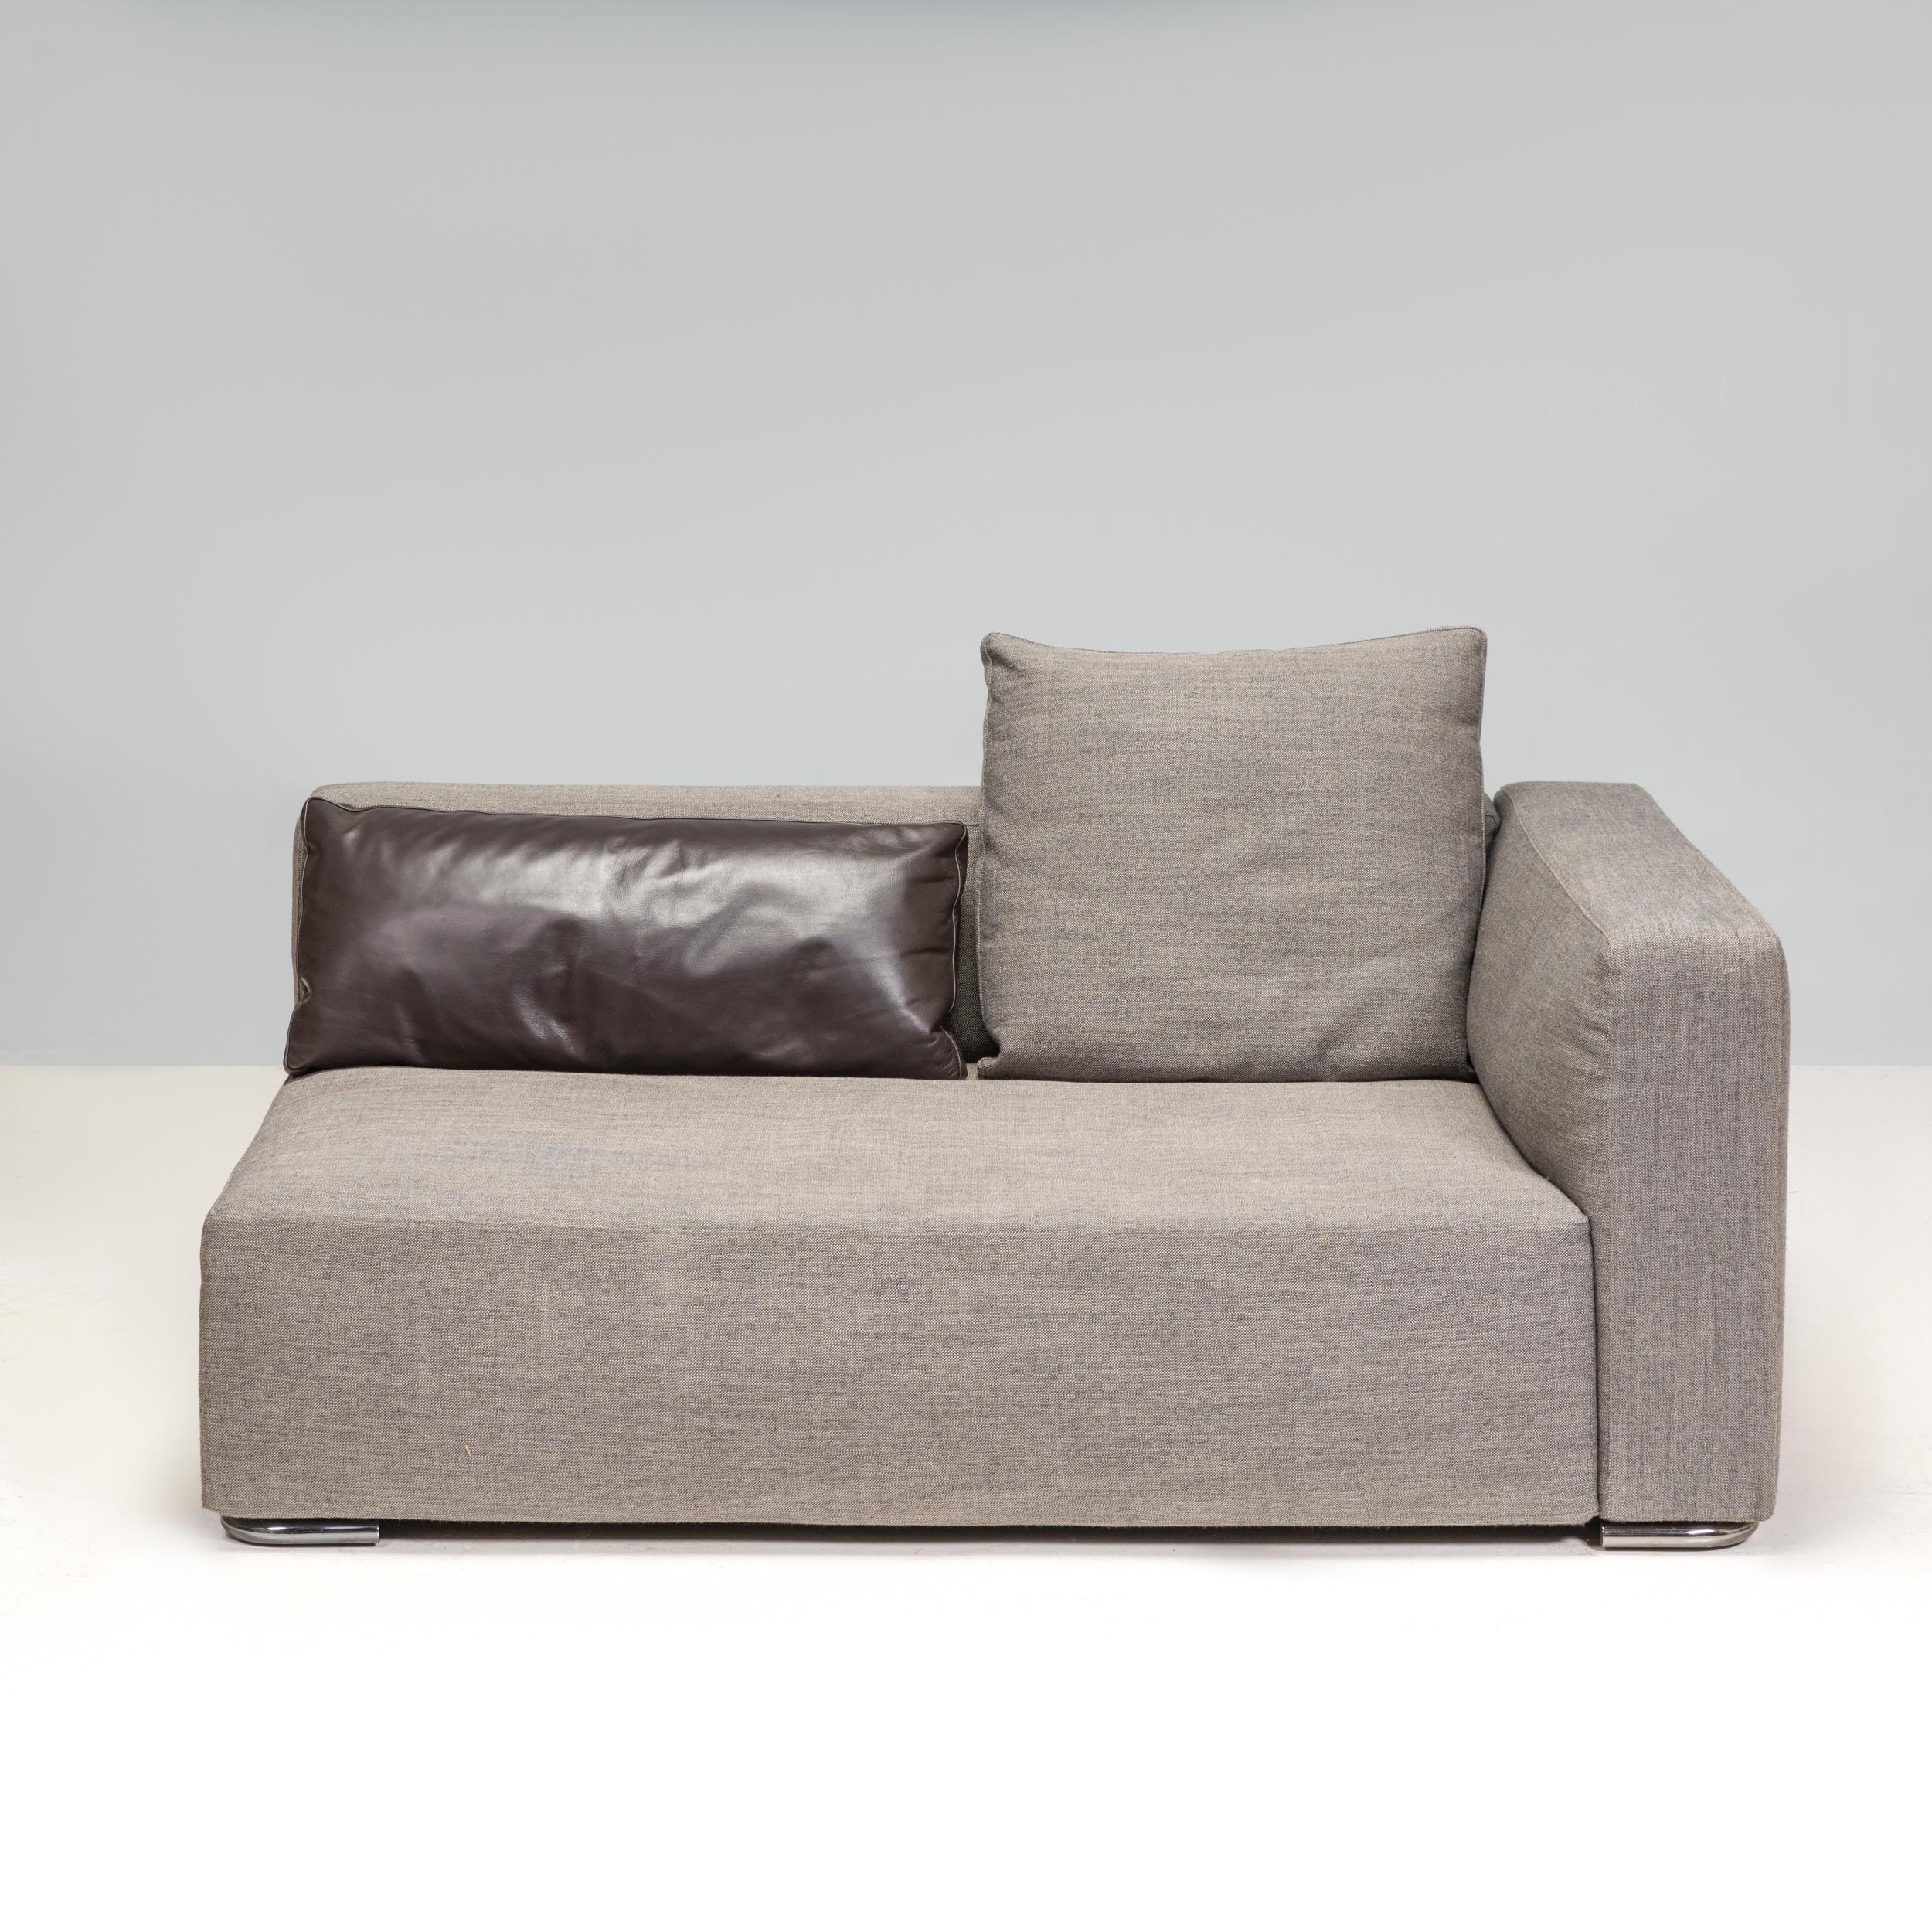 Minotti By Rodolfo Dordoni Donovan Grey Sofa In Good Condition For Sale In London, GB